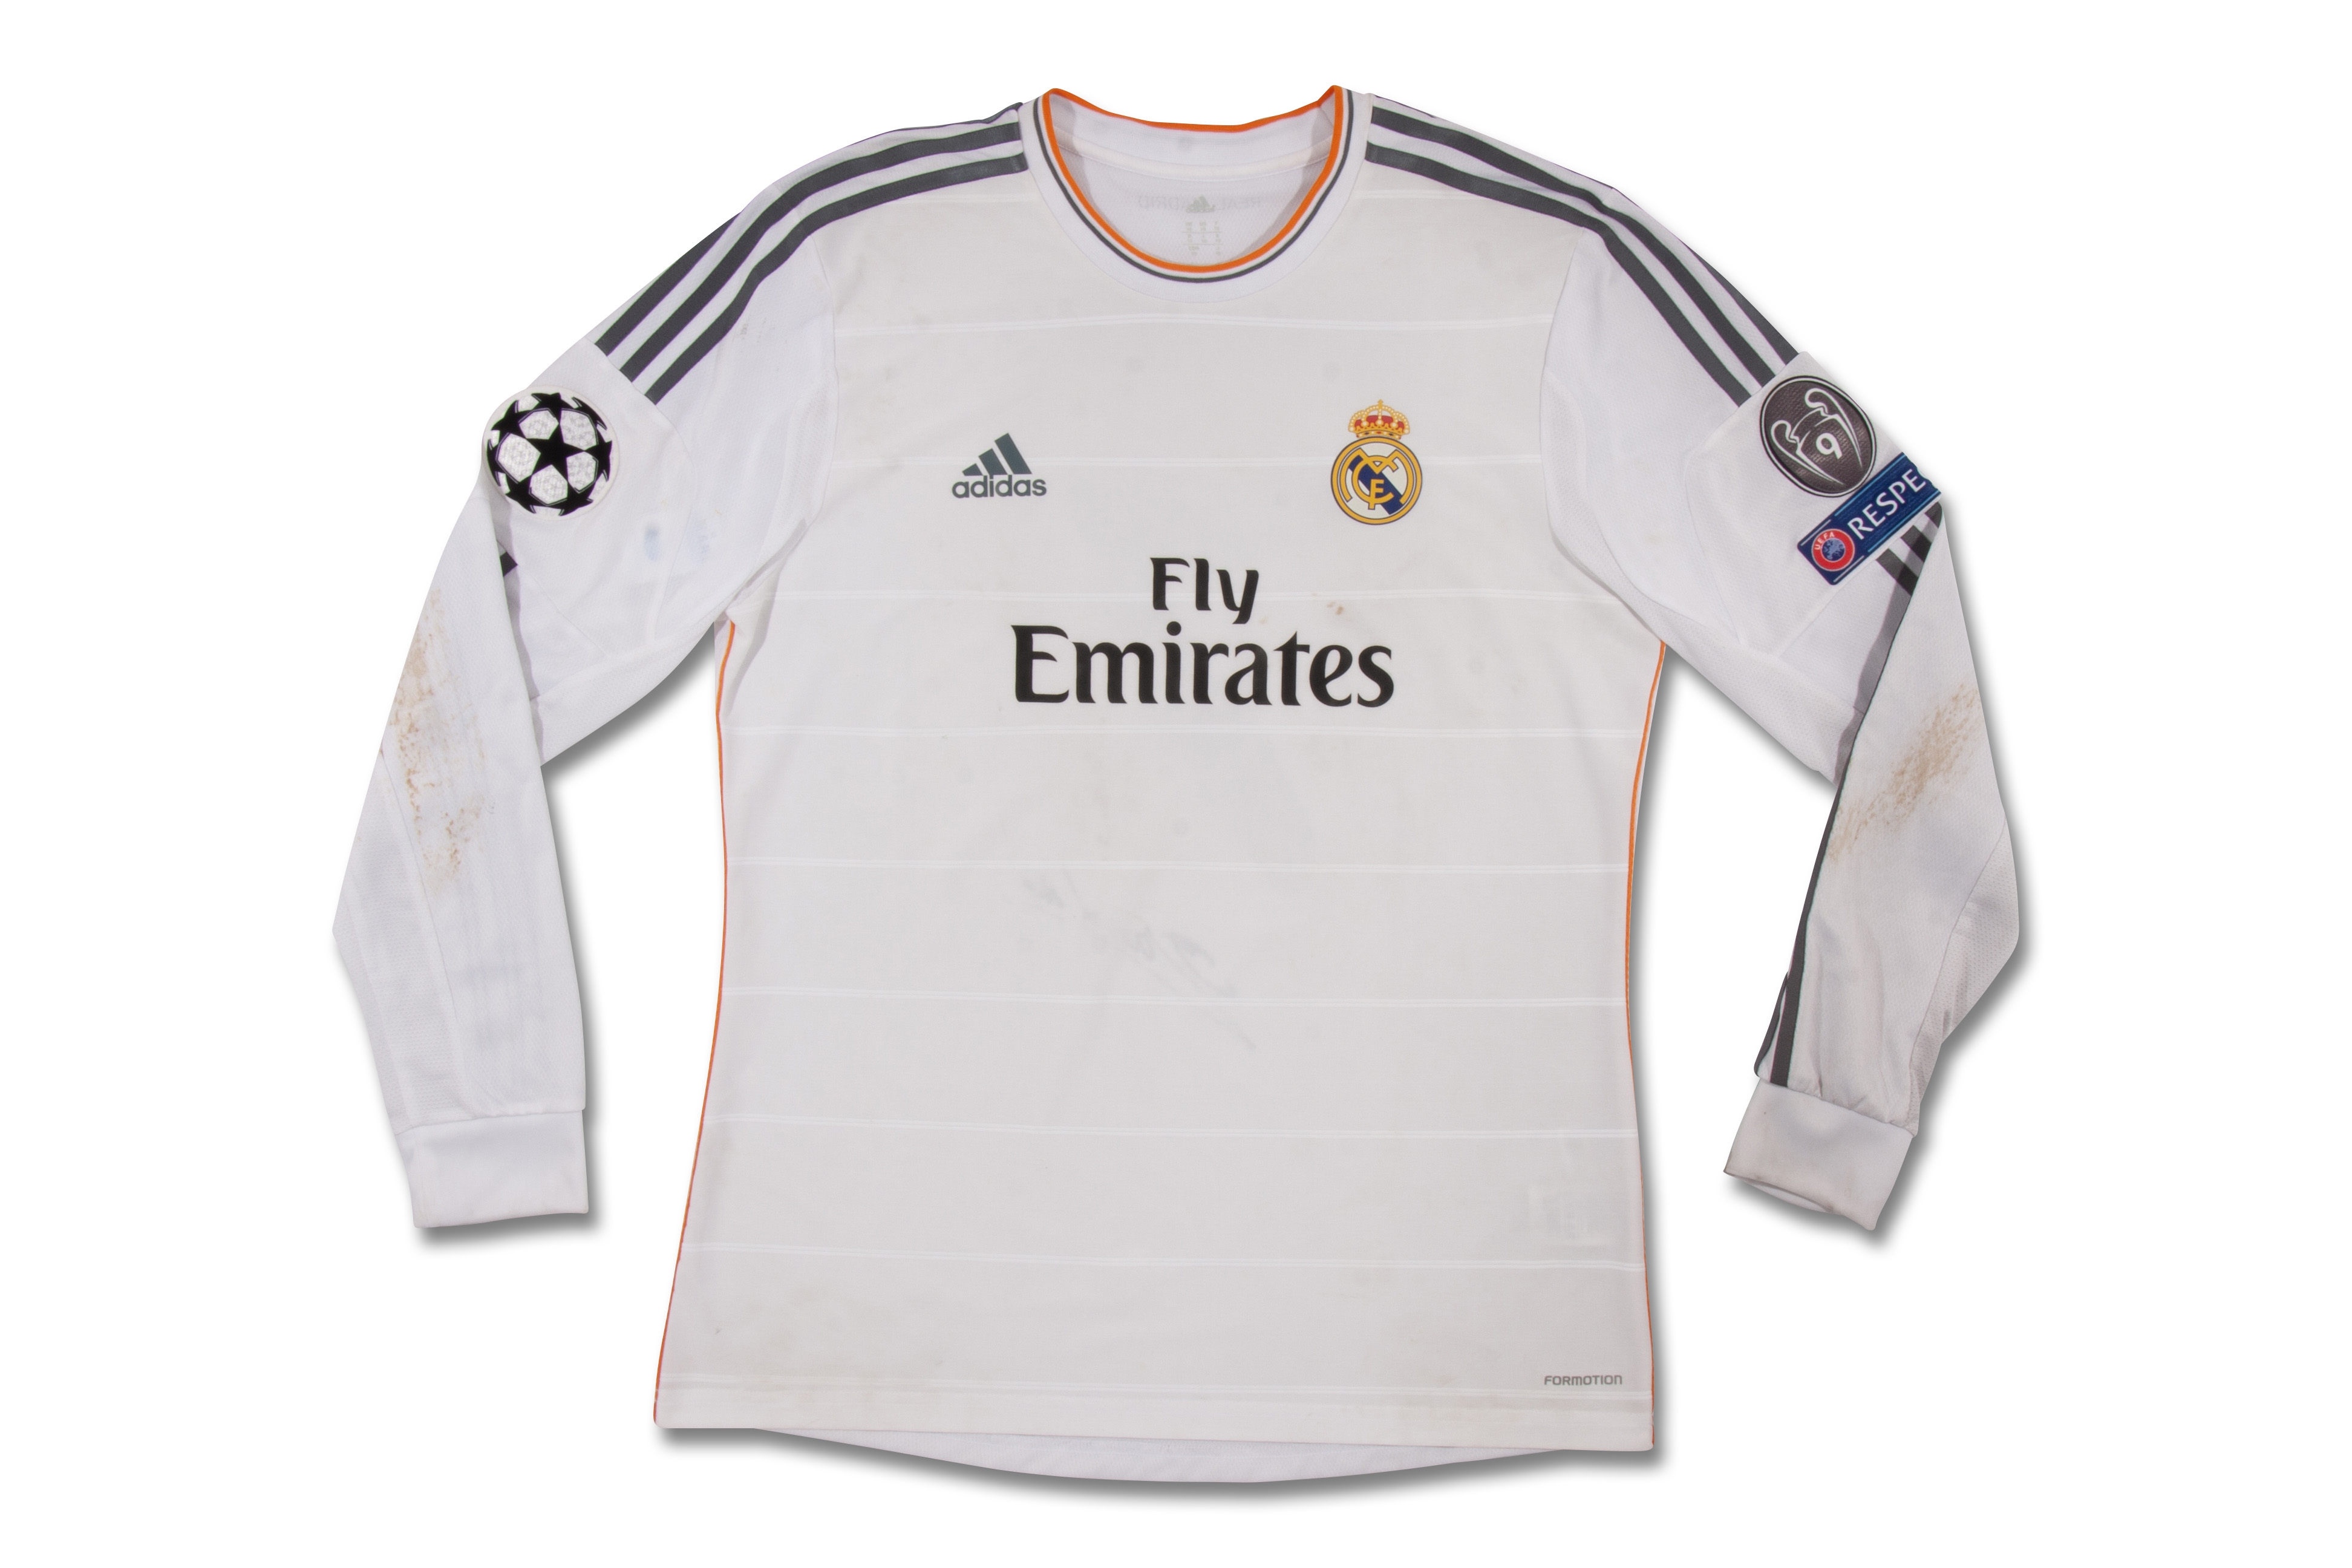 Real Madrid Fly Emirates Sponsored Team Cristiano Ronaldo Soccer Jersey  T-Shirt